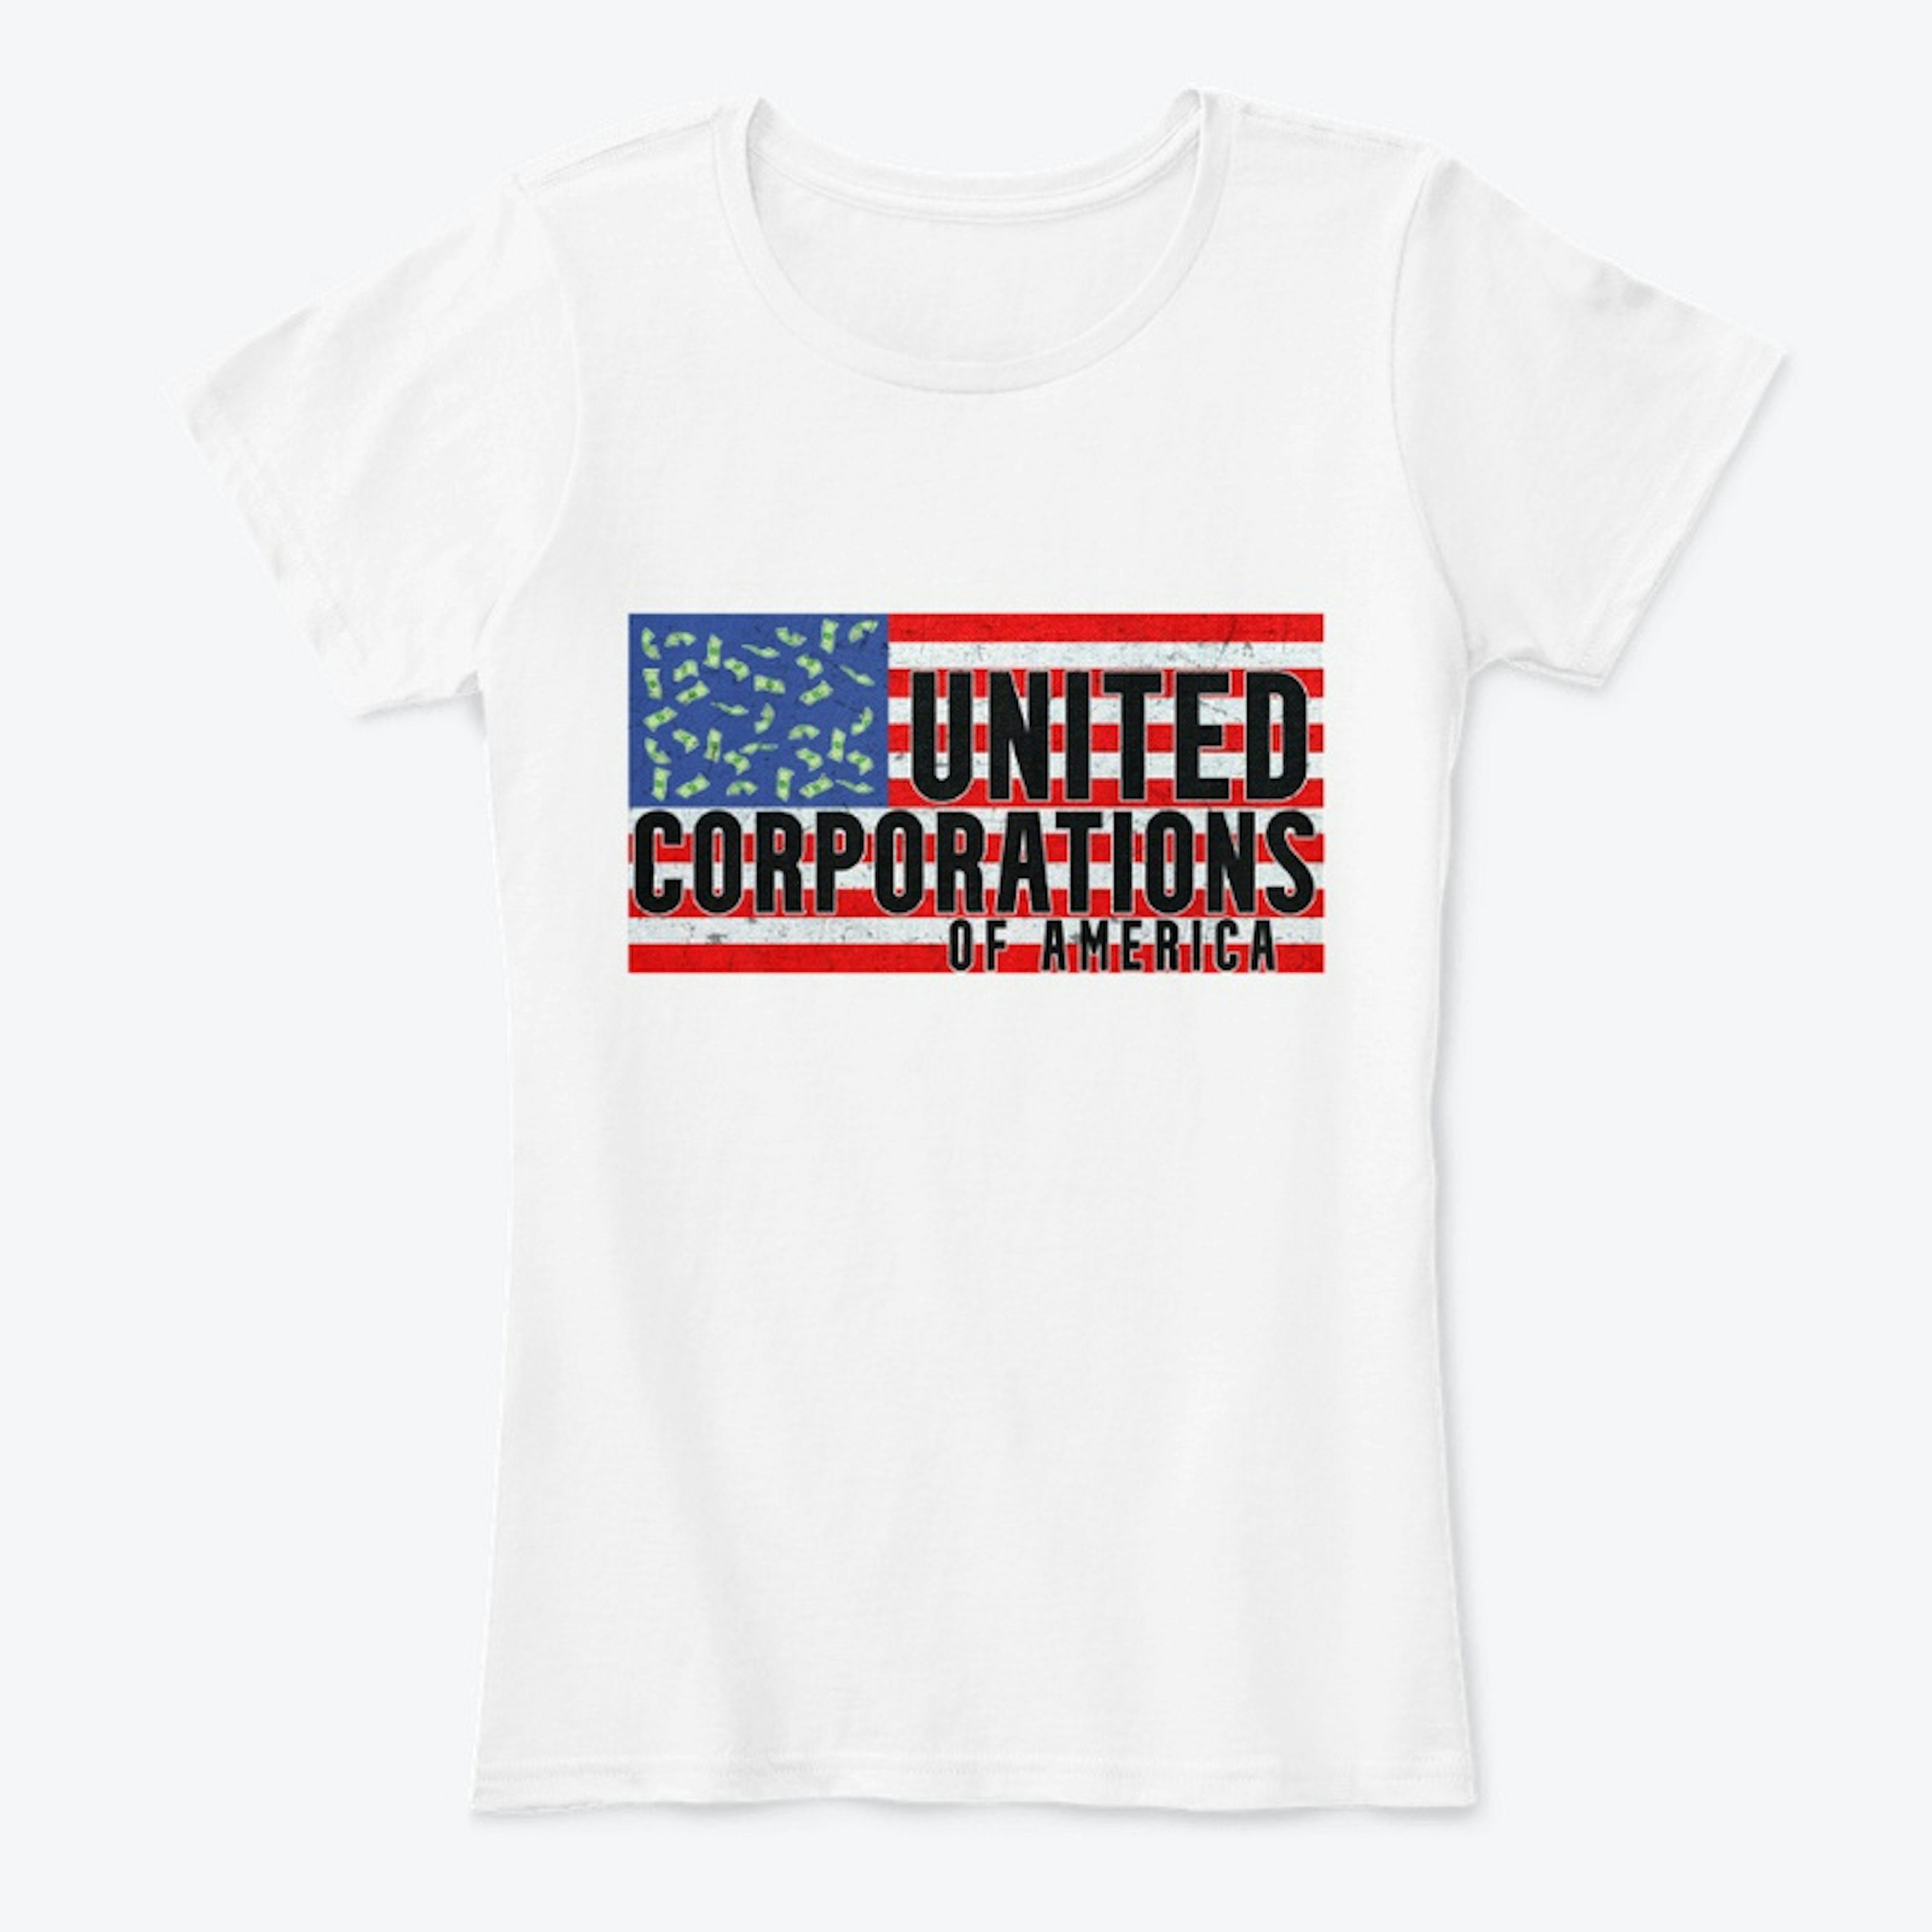 United Corporations of America